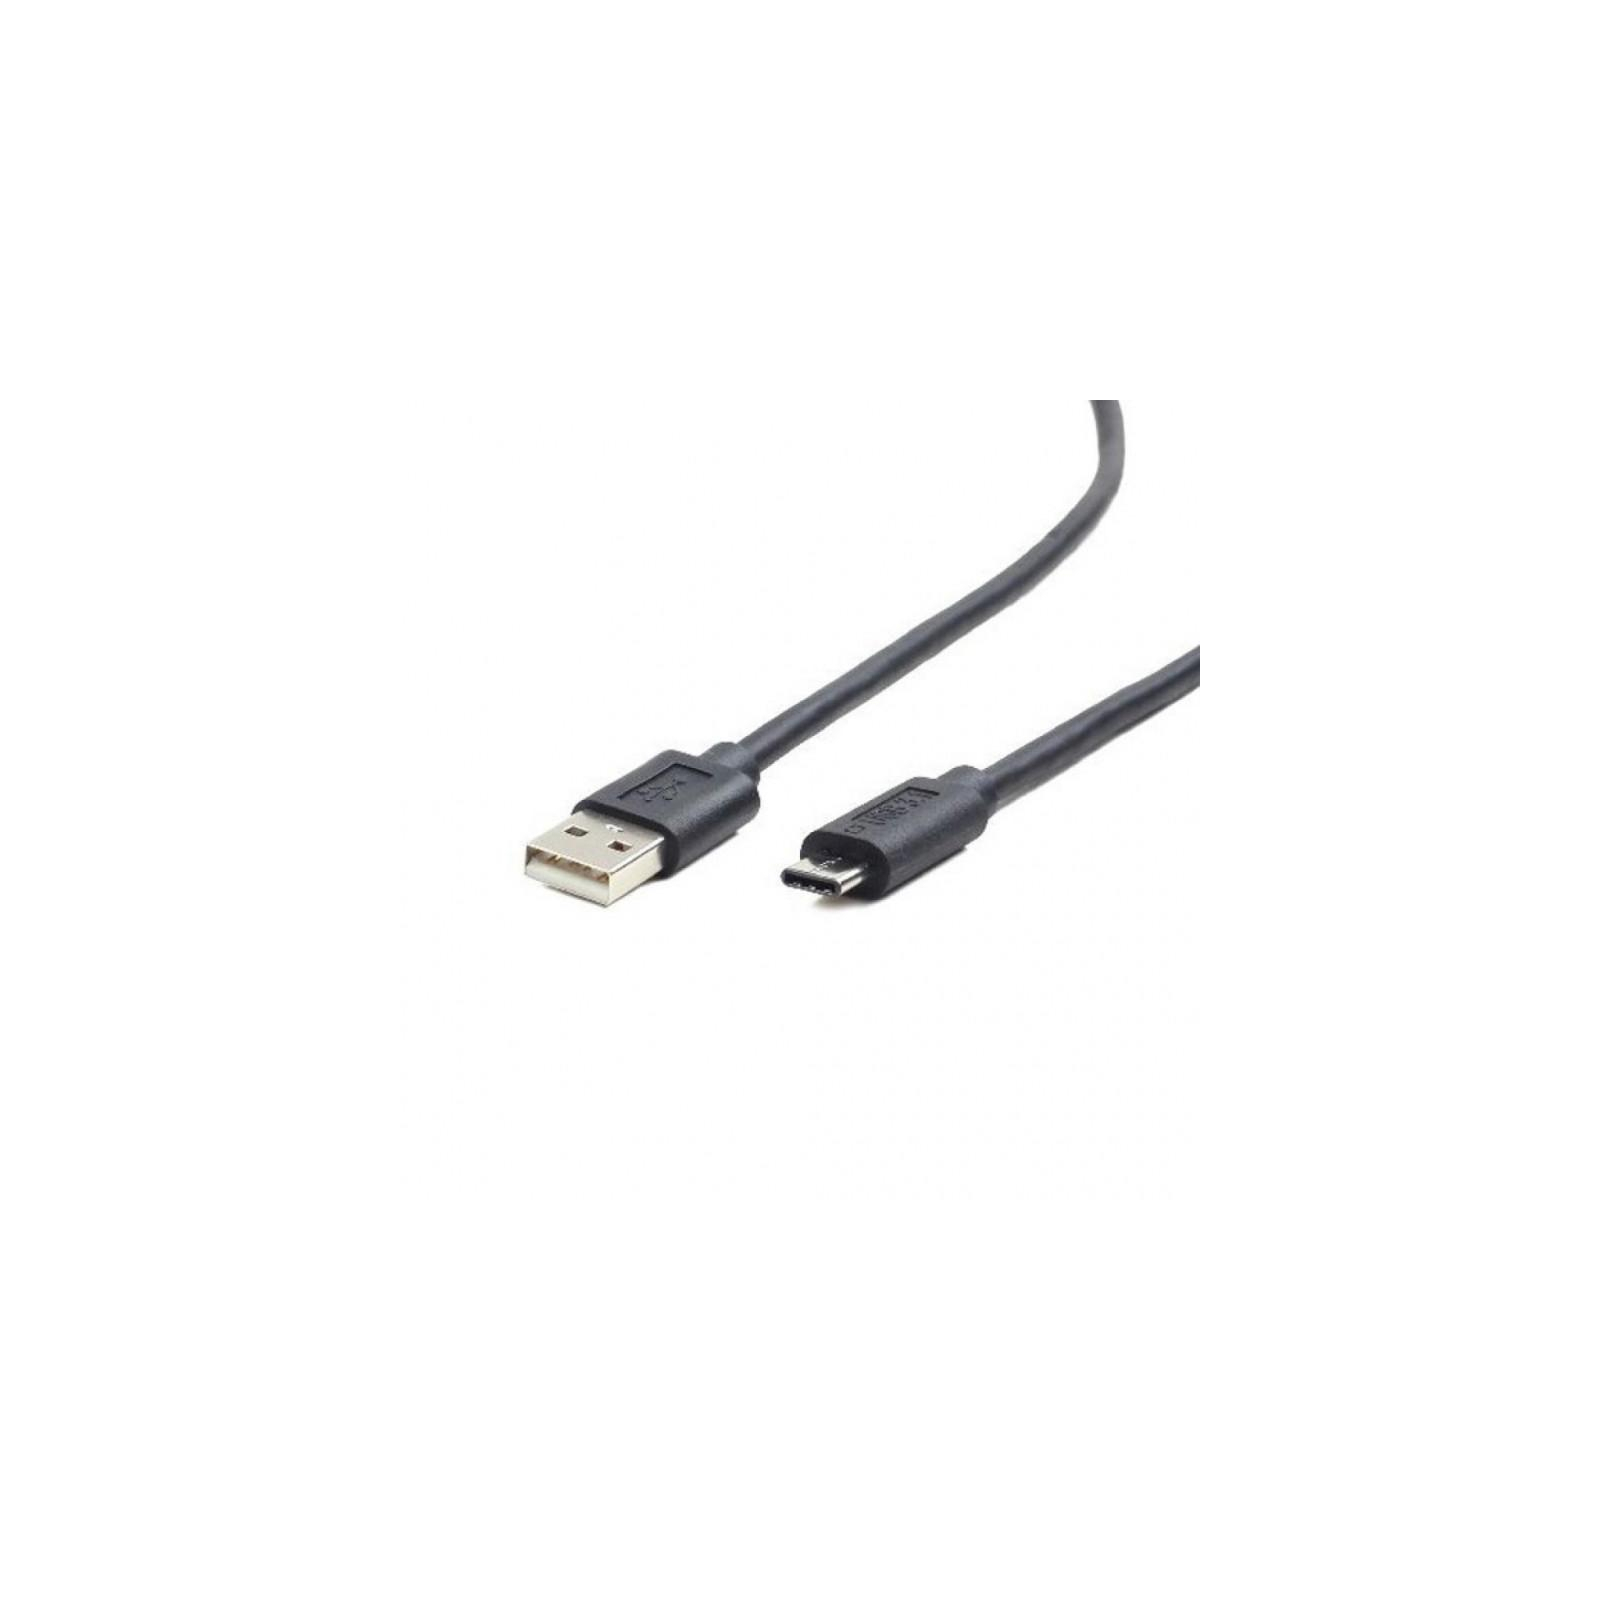 Дата кабель USB 2.0 AM to Type-C 1.0m CK-50 Black Inkax (F_72196)